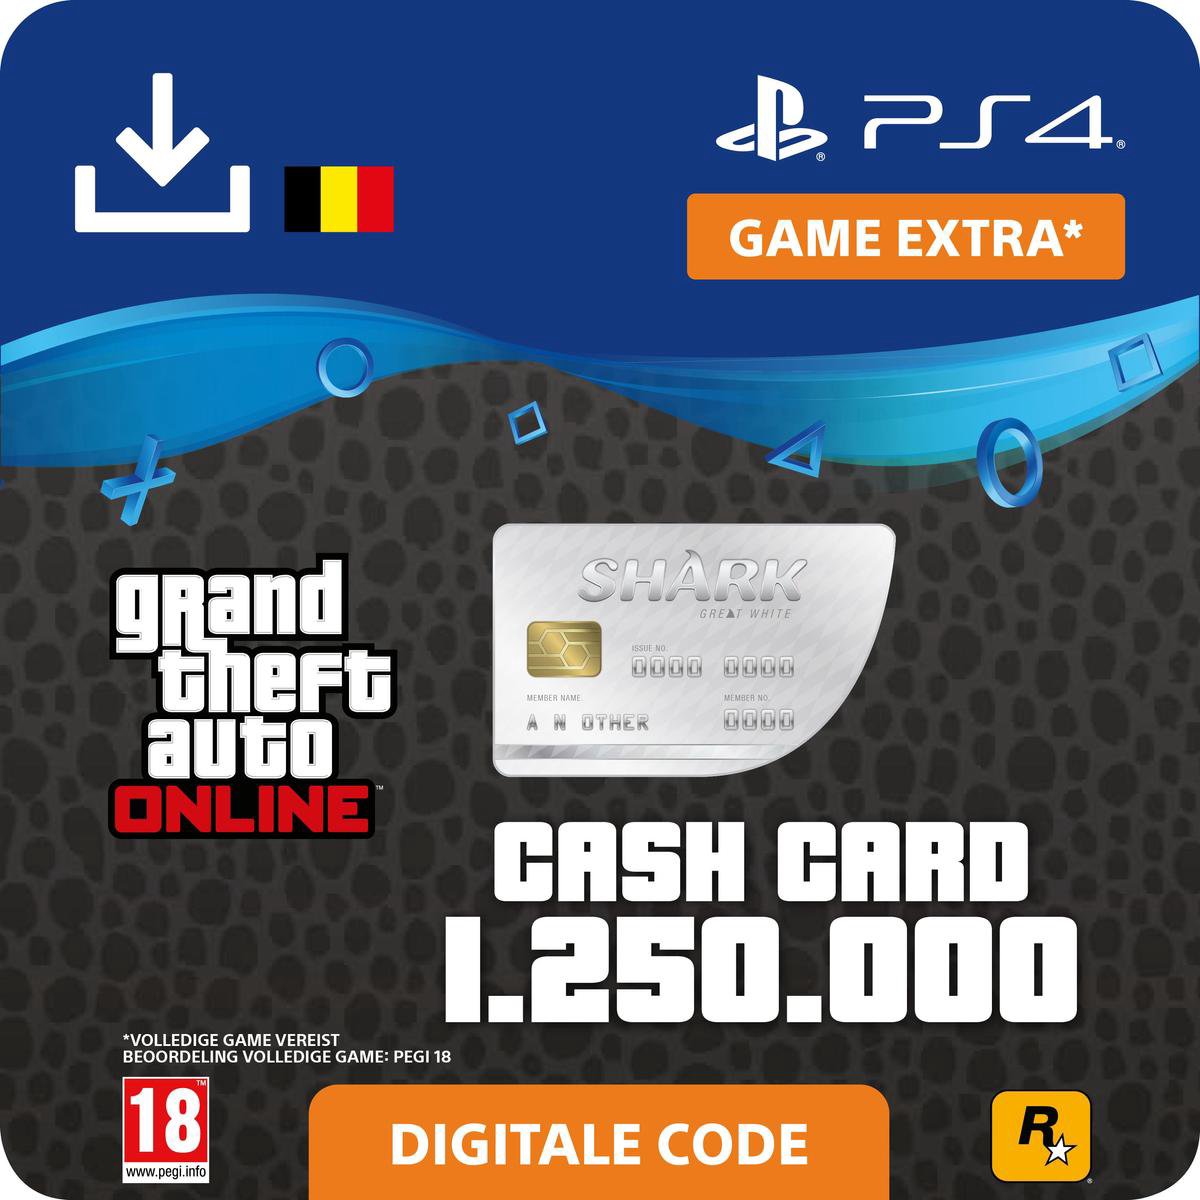 GTA V - digitale valuta - 1.250.000 GTA dollars Great White Shark - NL - PS4 download - Sony digitaal